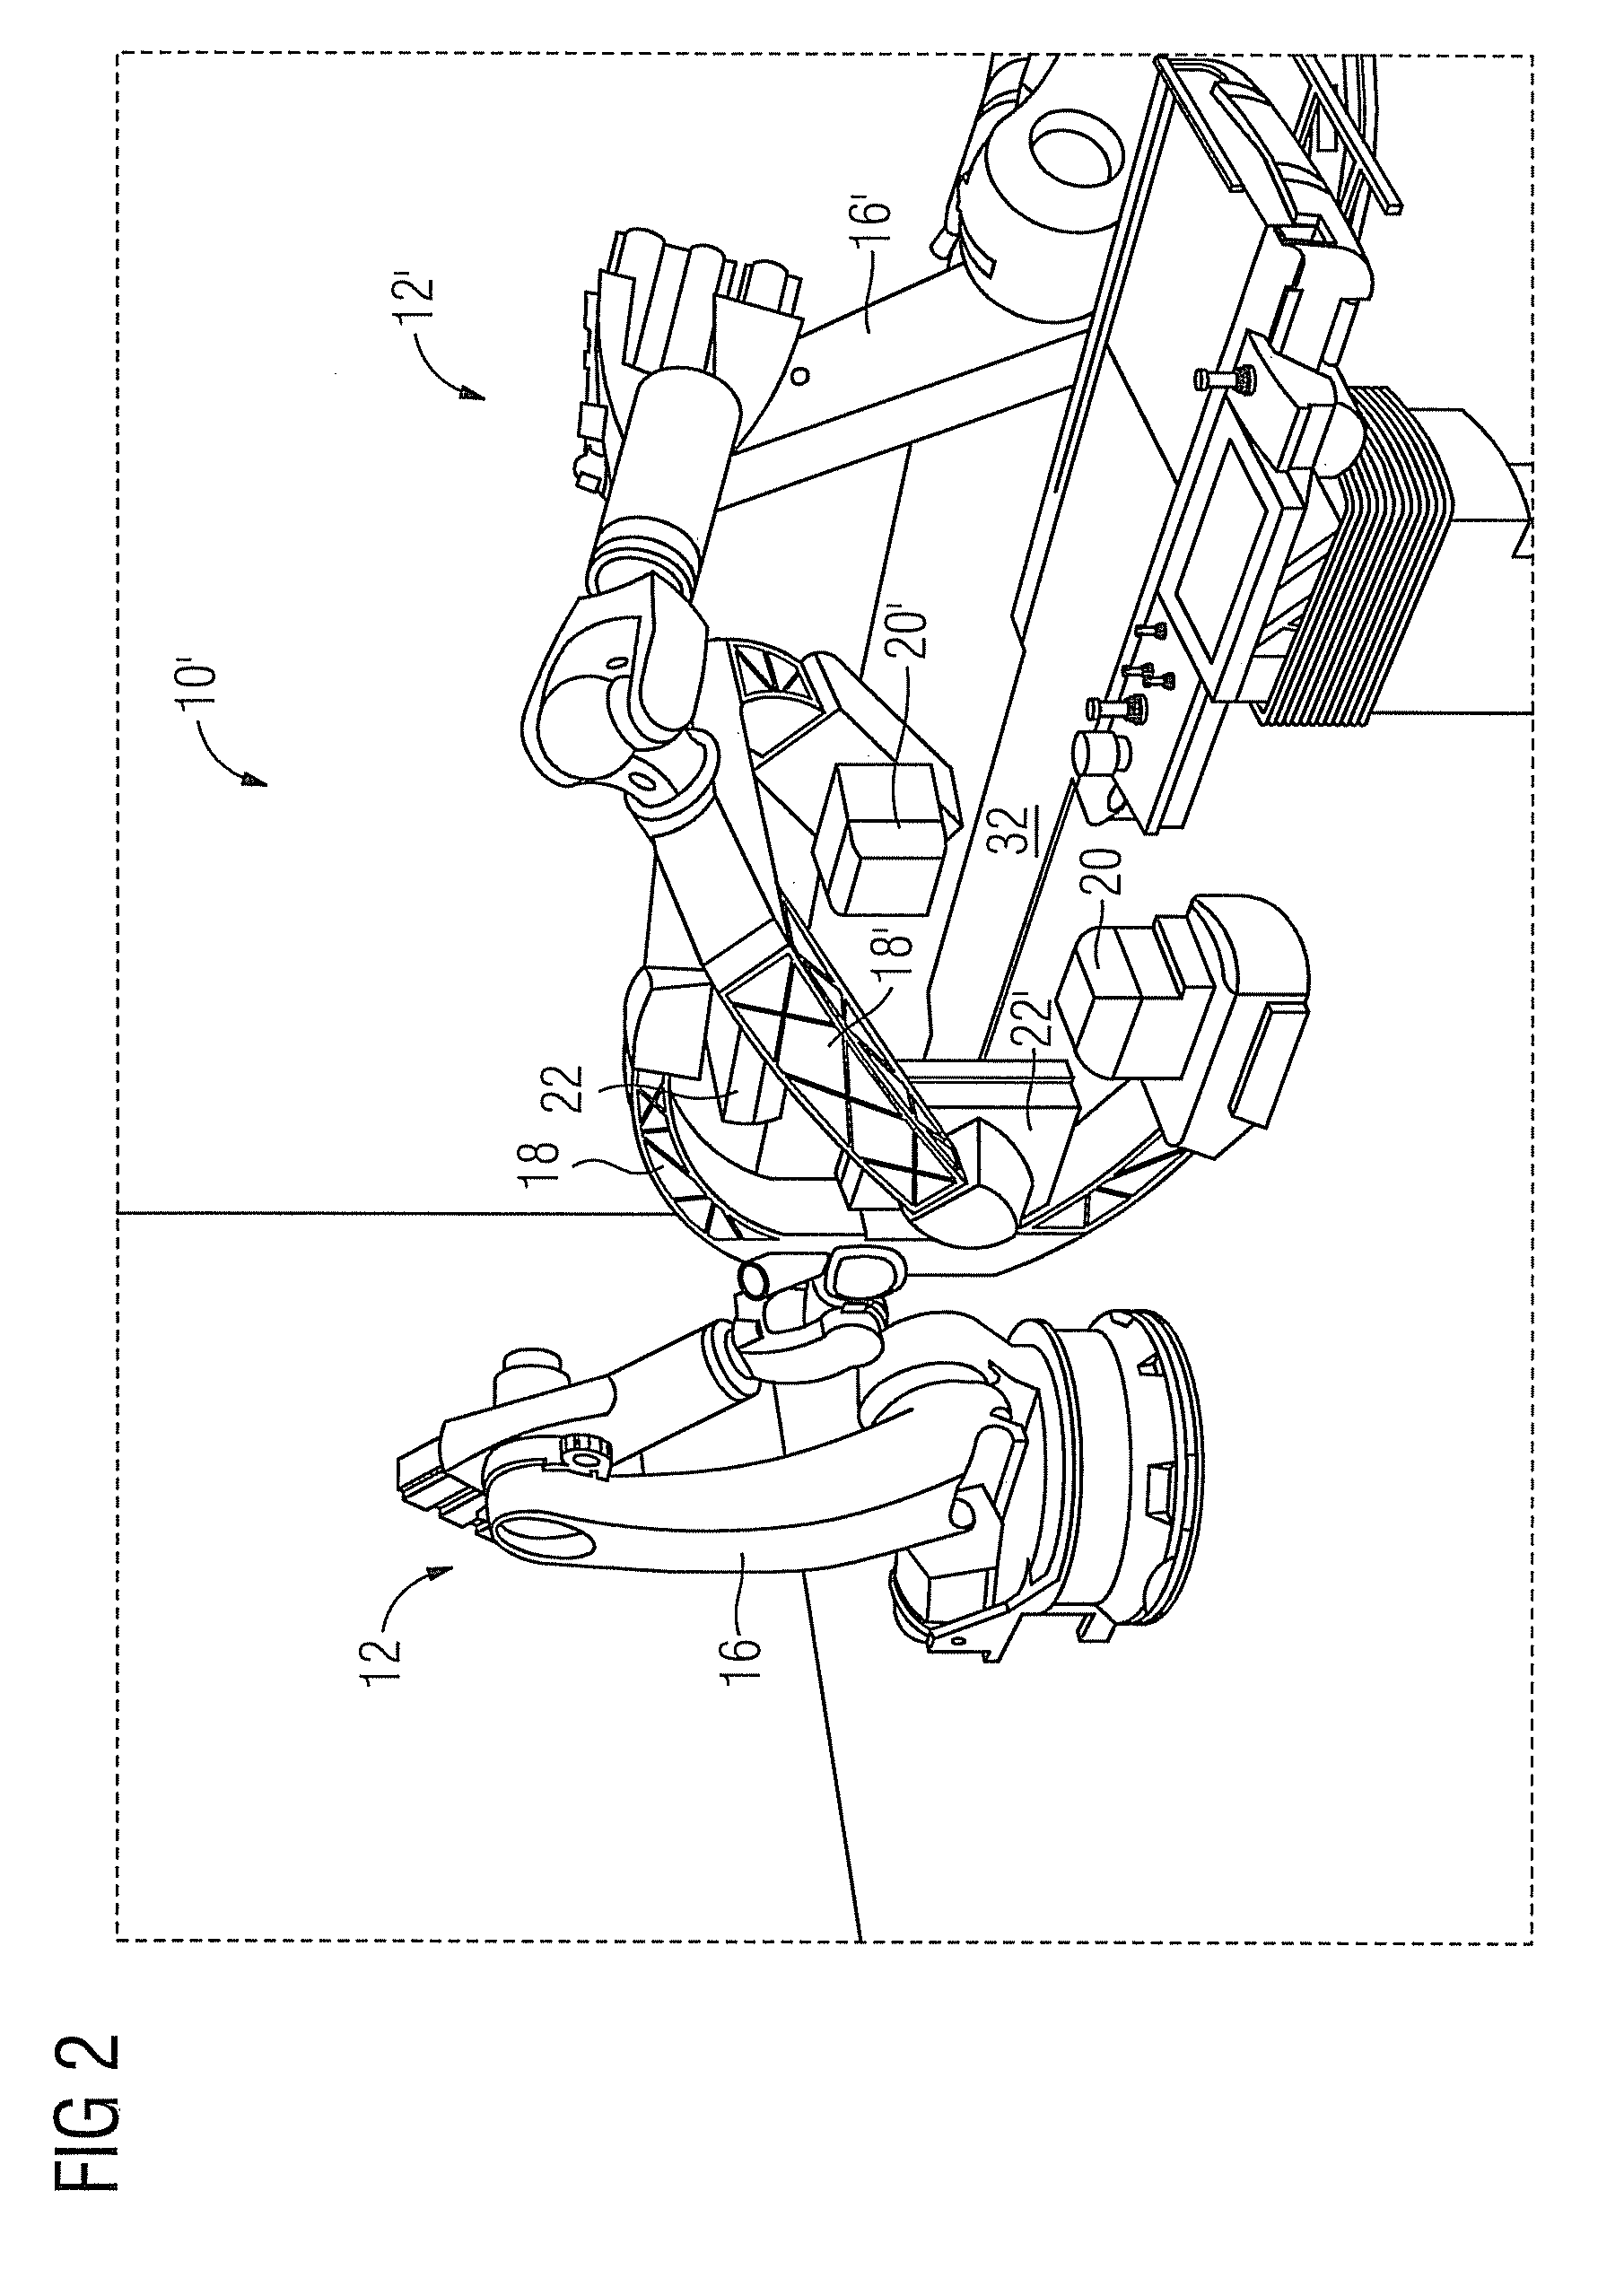 Biplane X-ray system